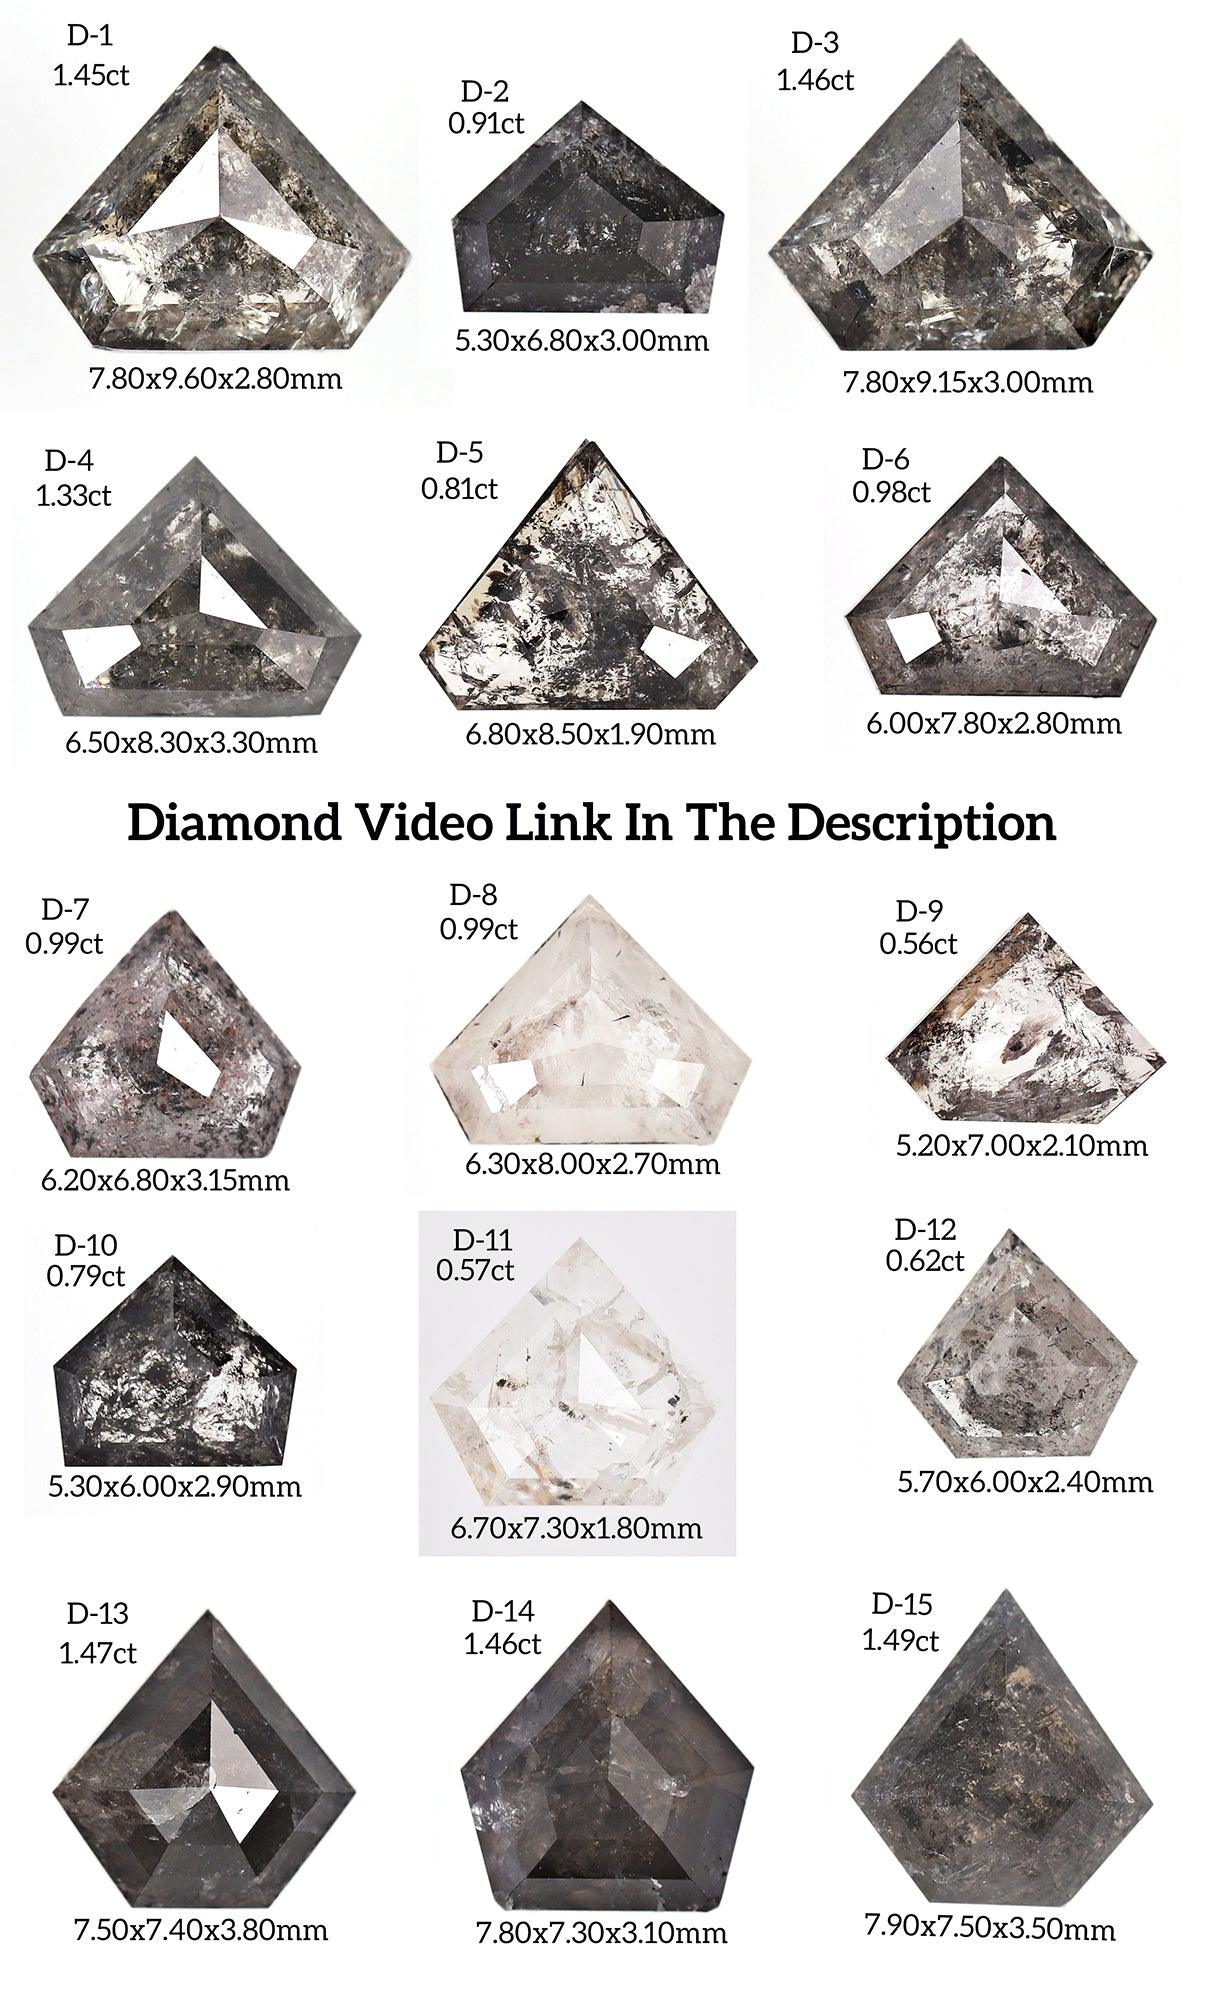 Salt and Pepper Pentagon Diamond Ring | Engagement Ring | Pentagon Diamond Ring - Rubysta